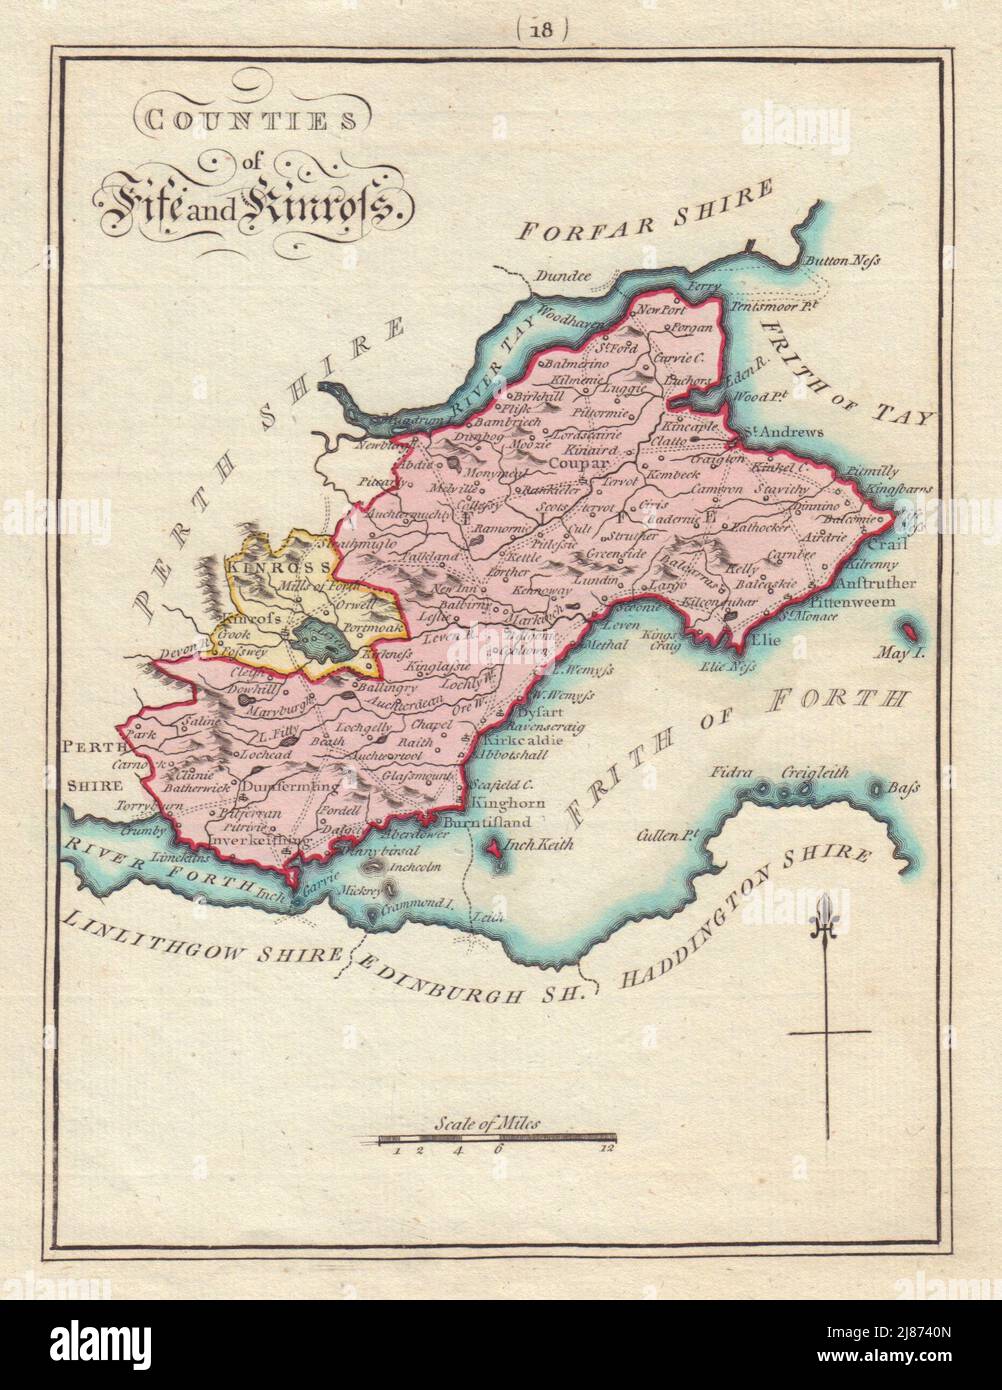 Counties of Fife and Kinross. Fife and Kinross-shire. SAYER / ARMSTRONG 1794 map Stock Photo